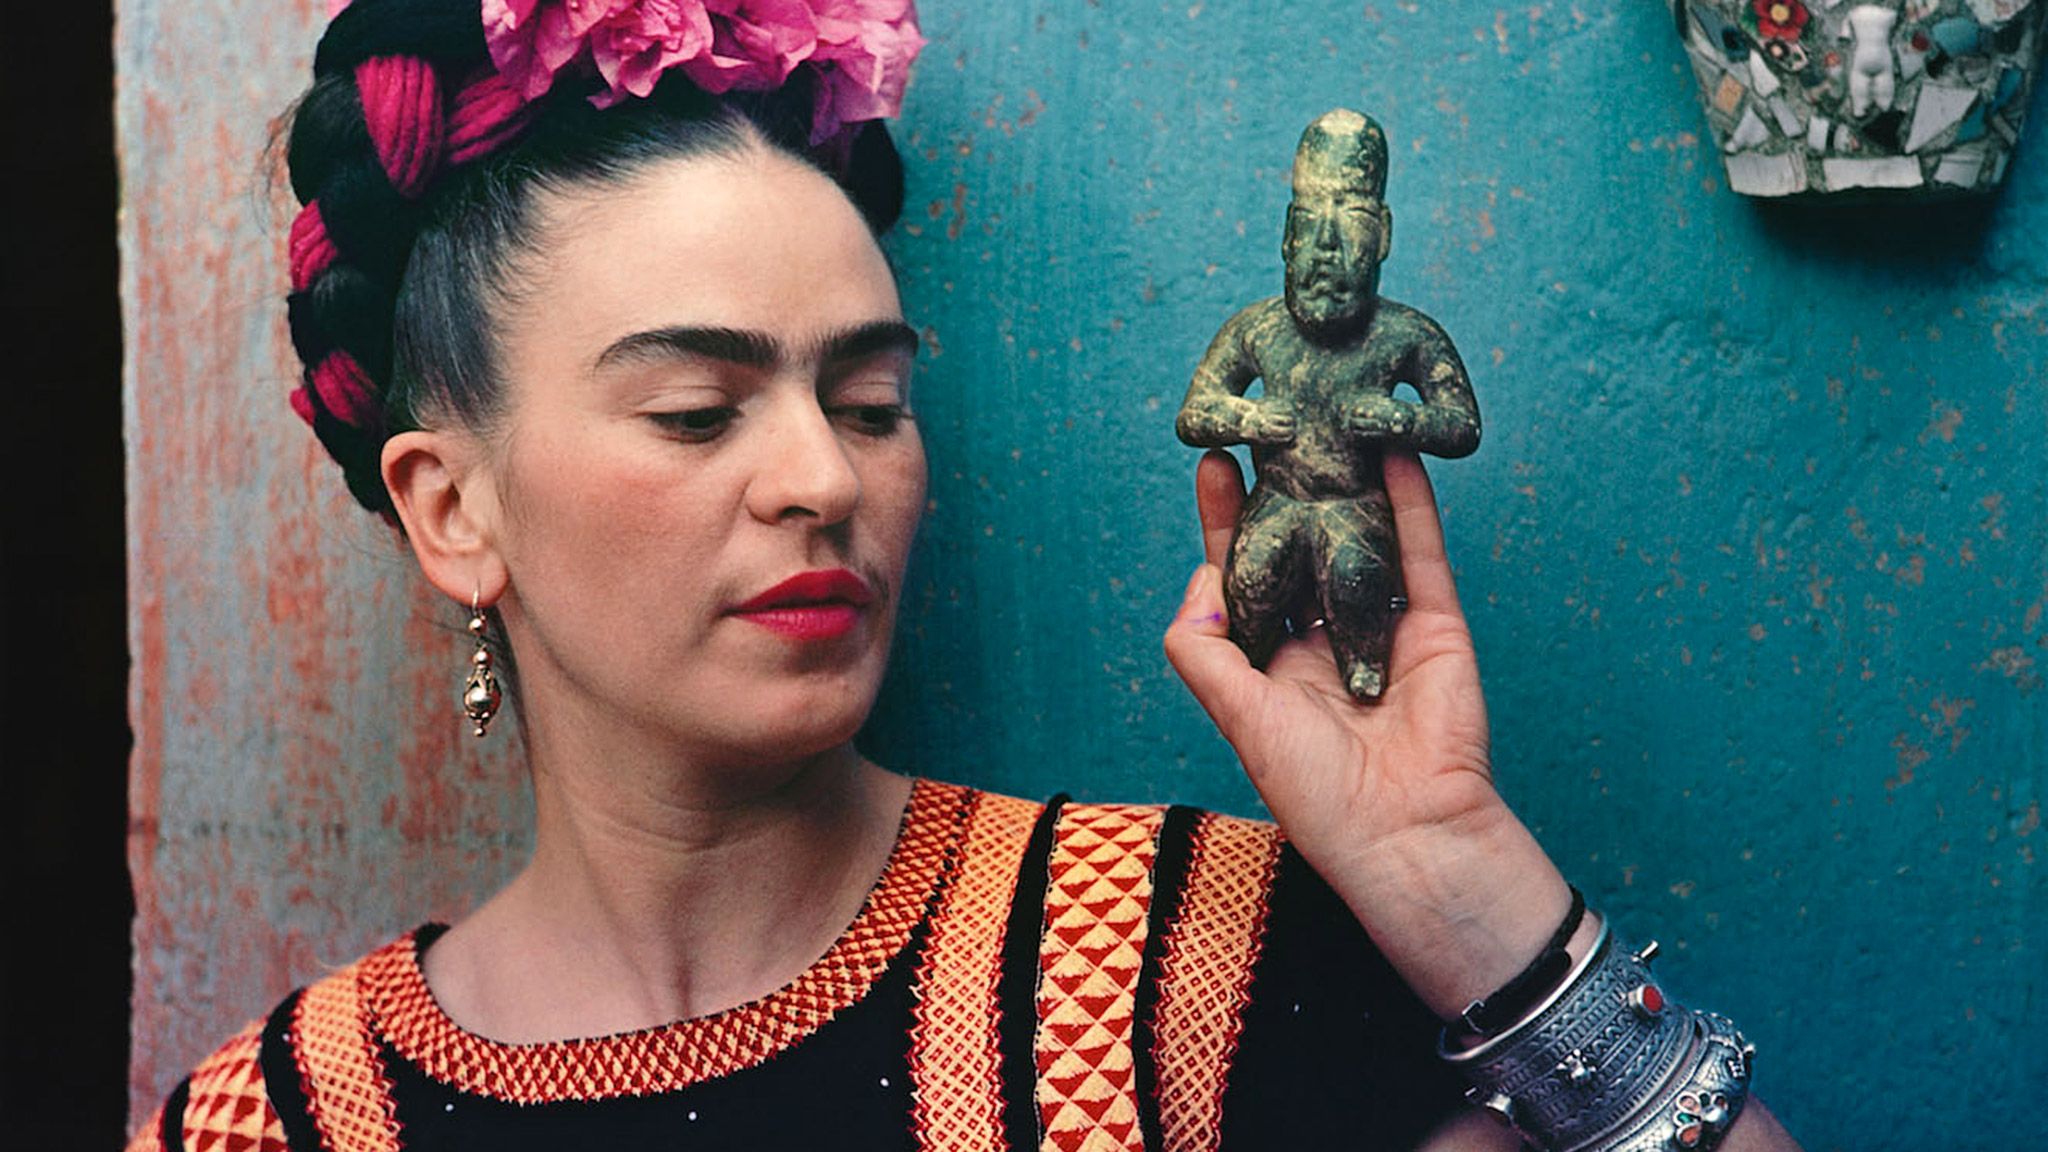 Wallpaper Frida Kahlo Quotes Wallpapers